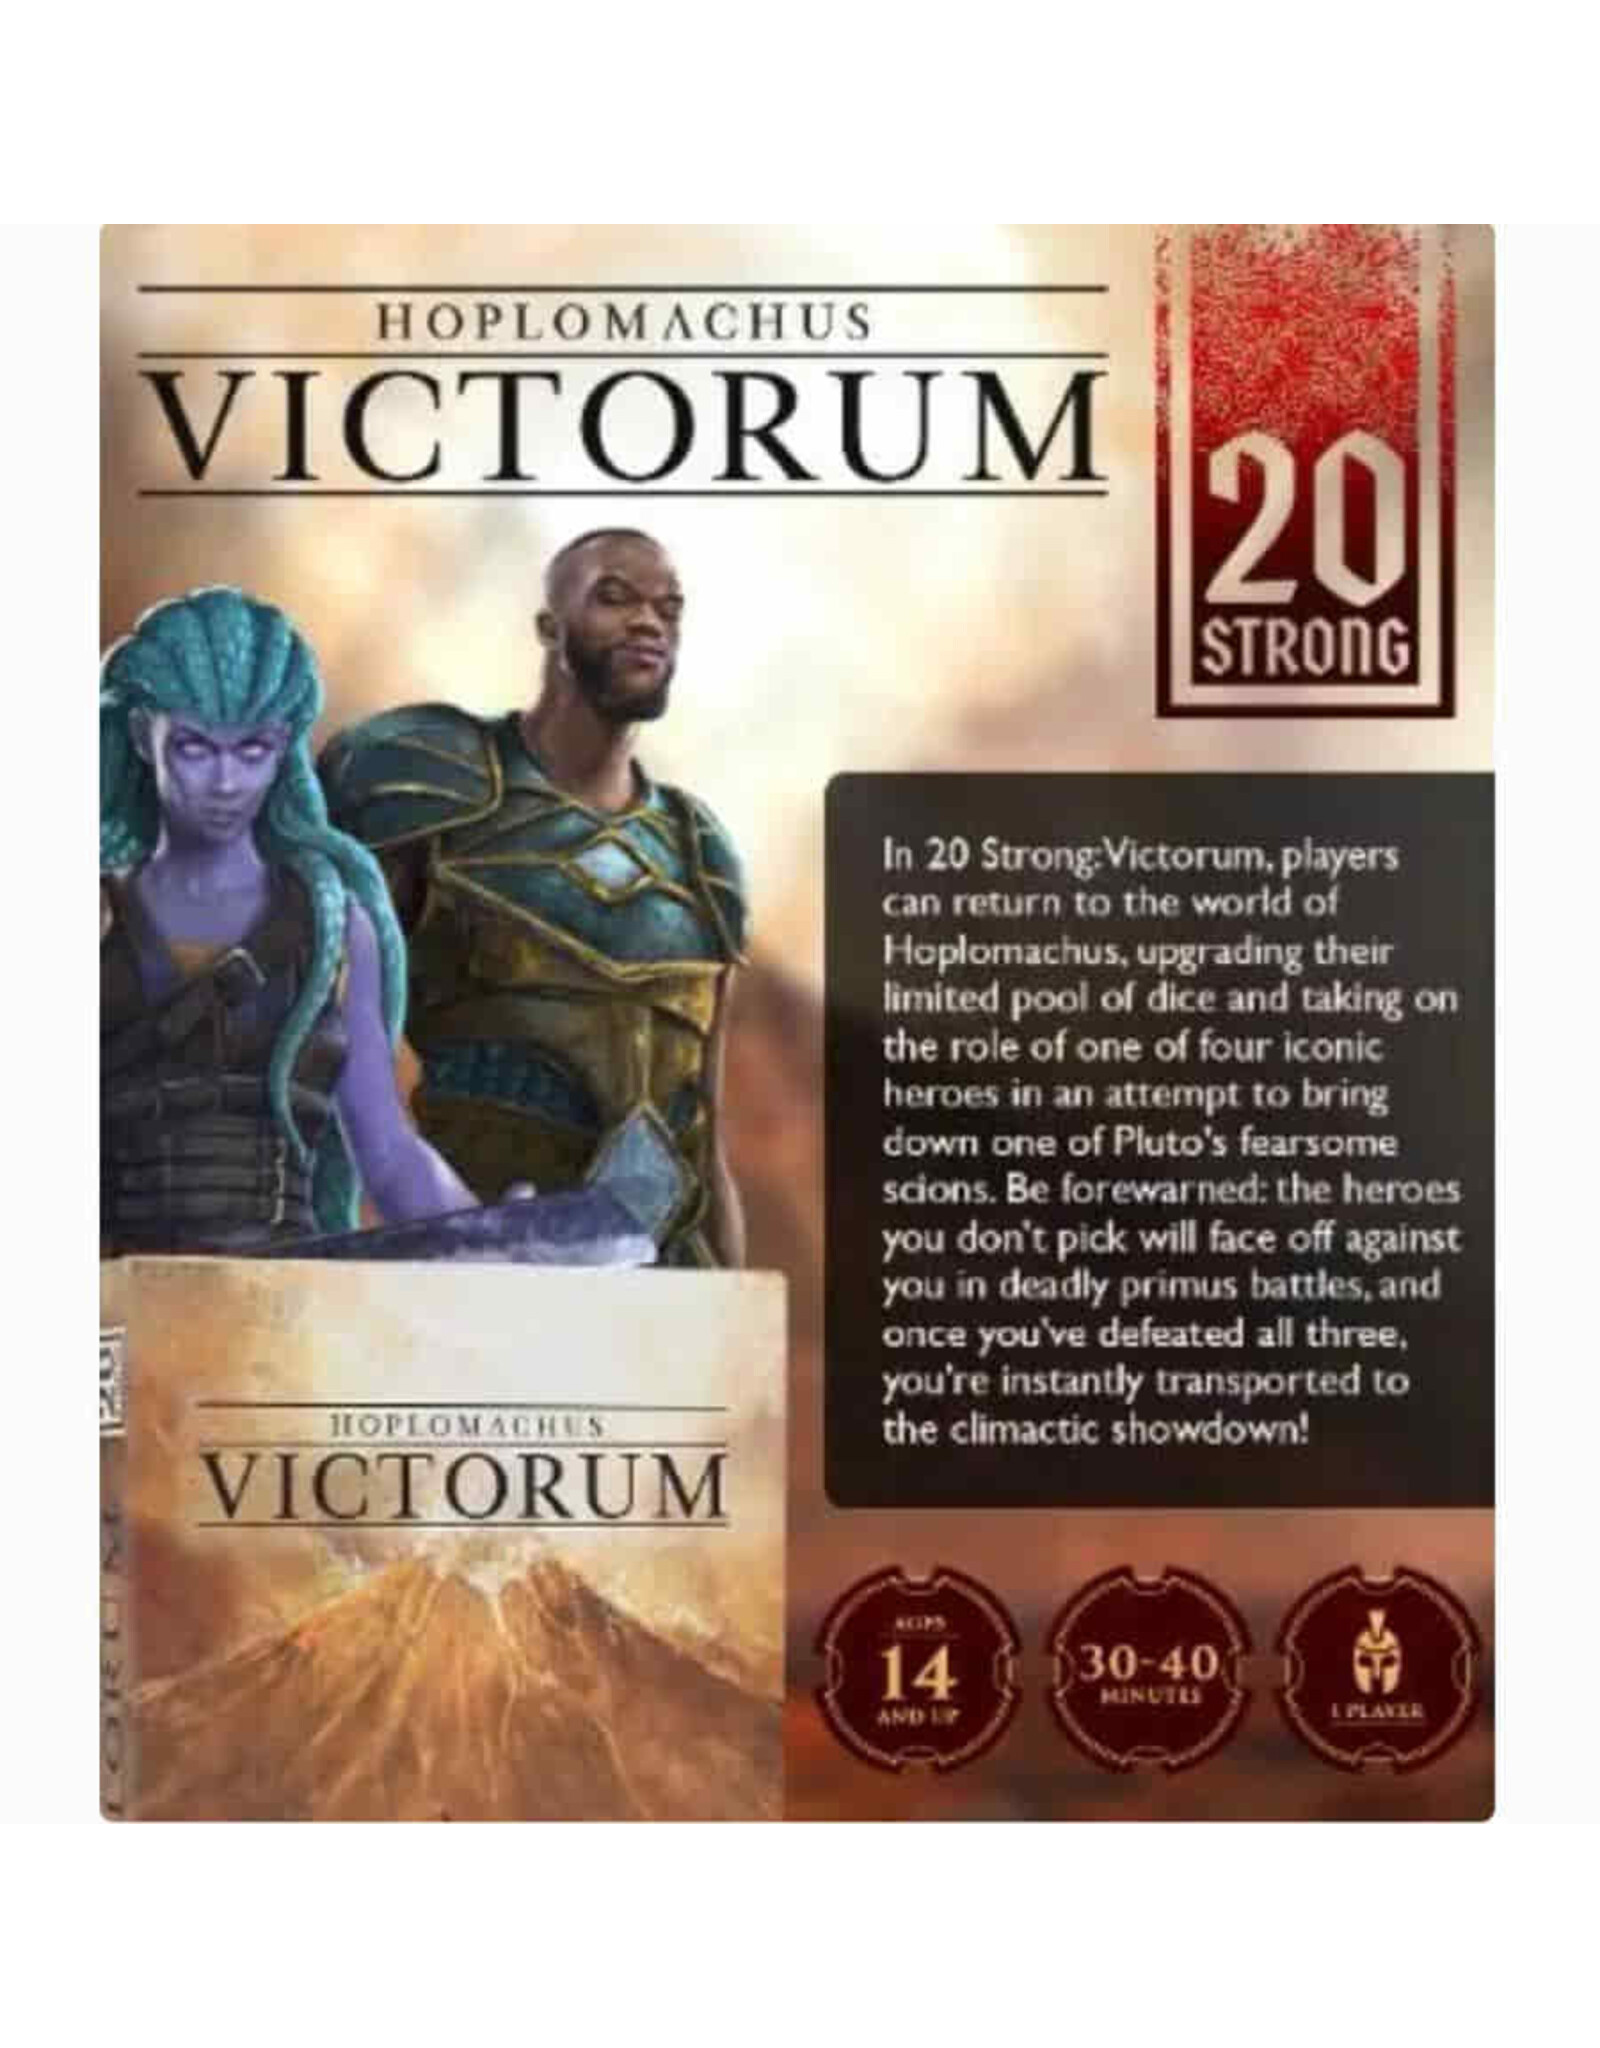 20 Strong: Victorum add-on